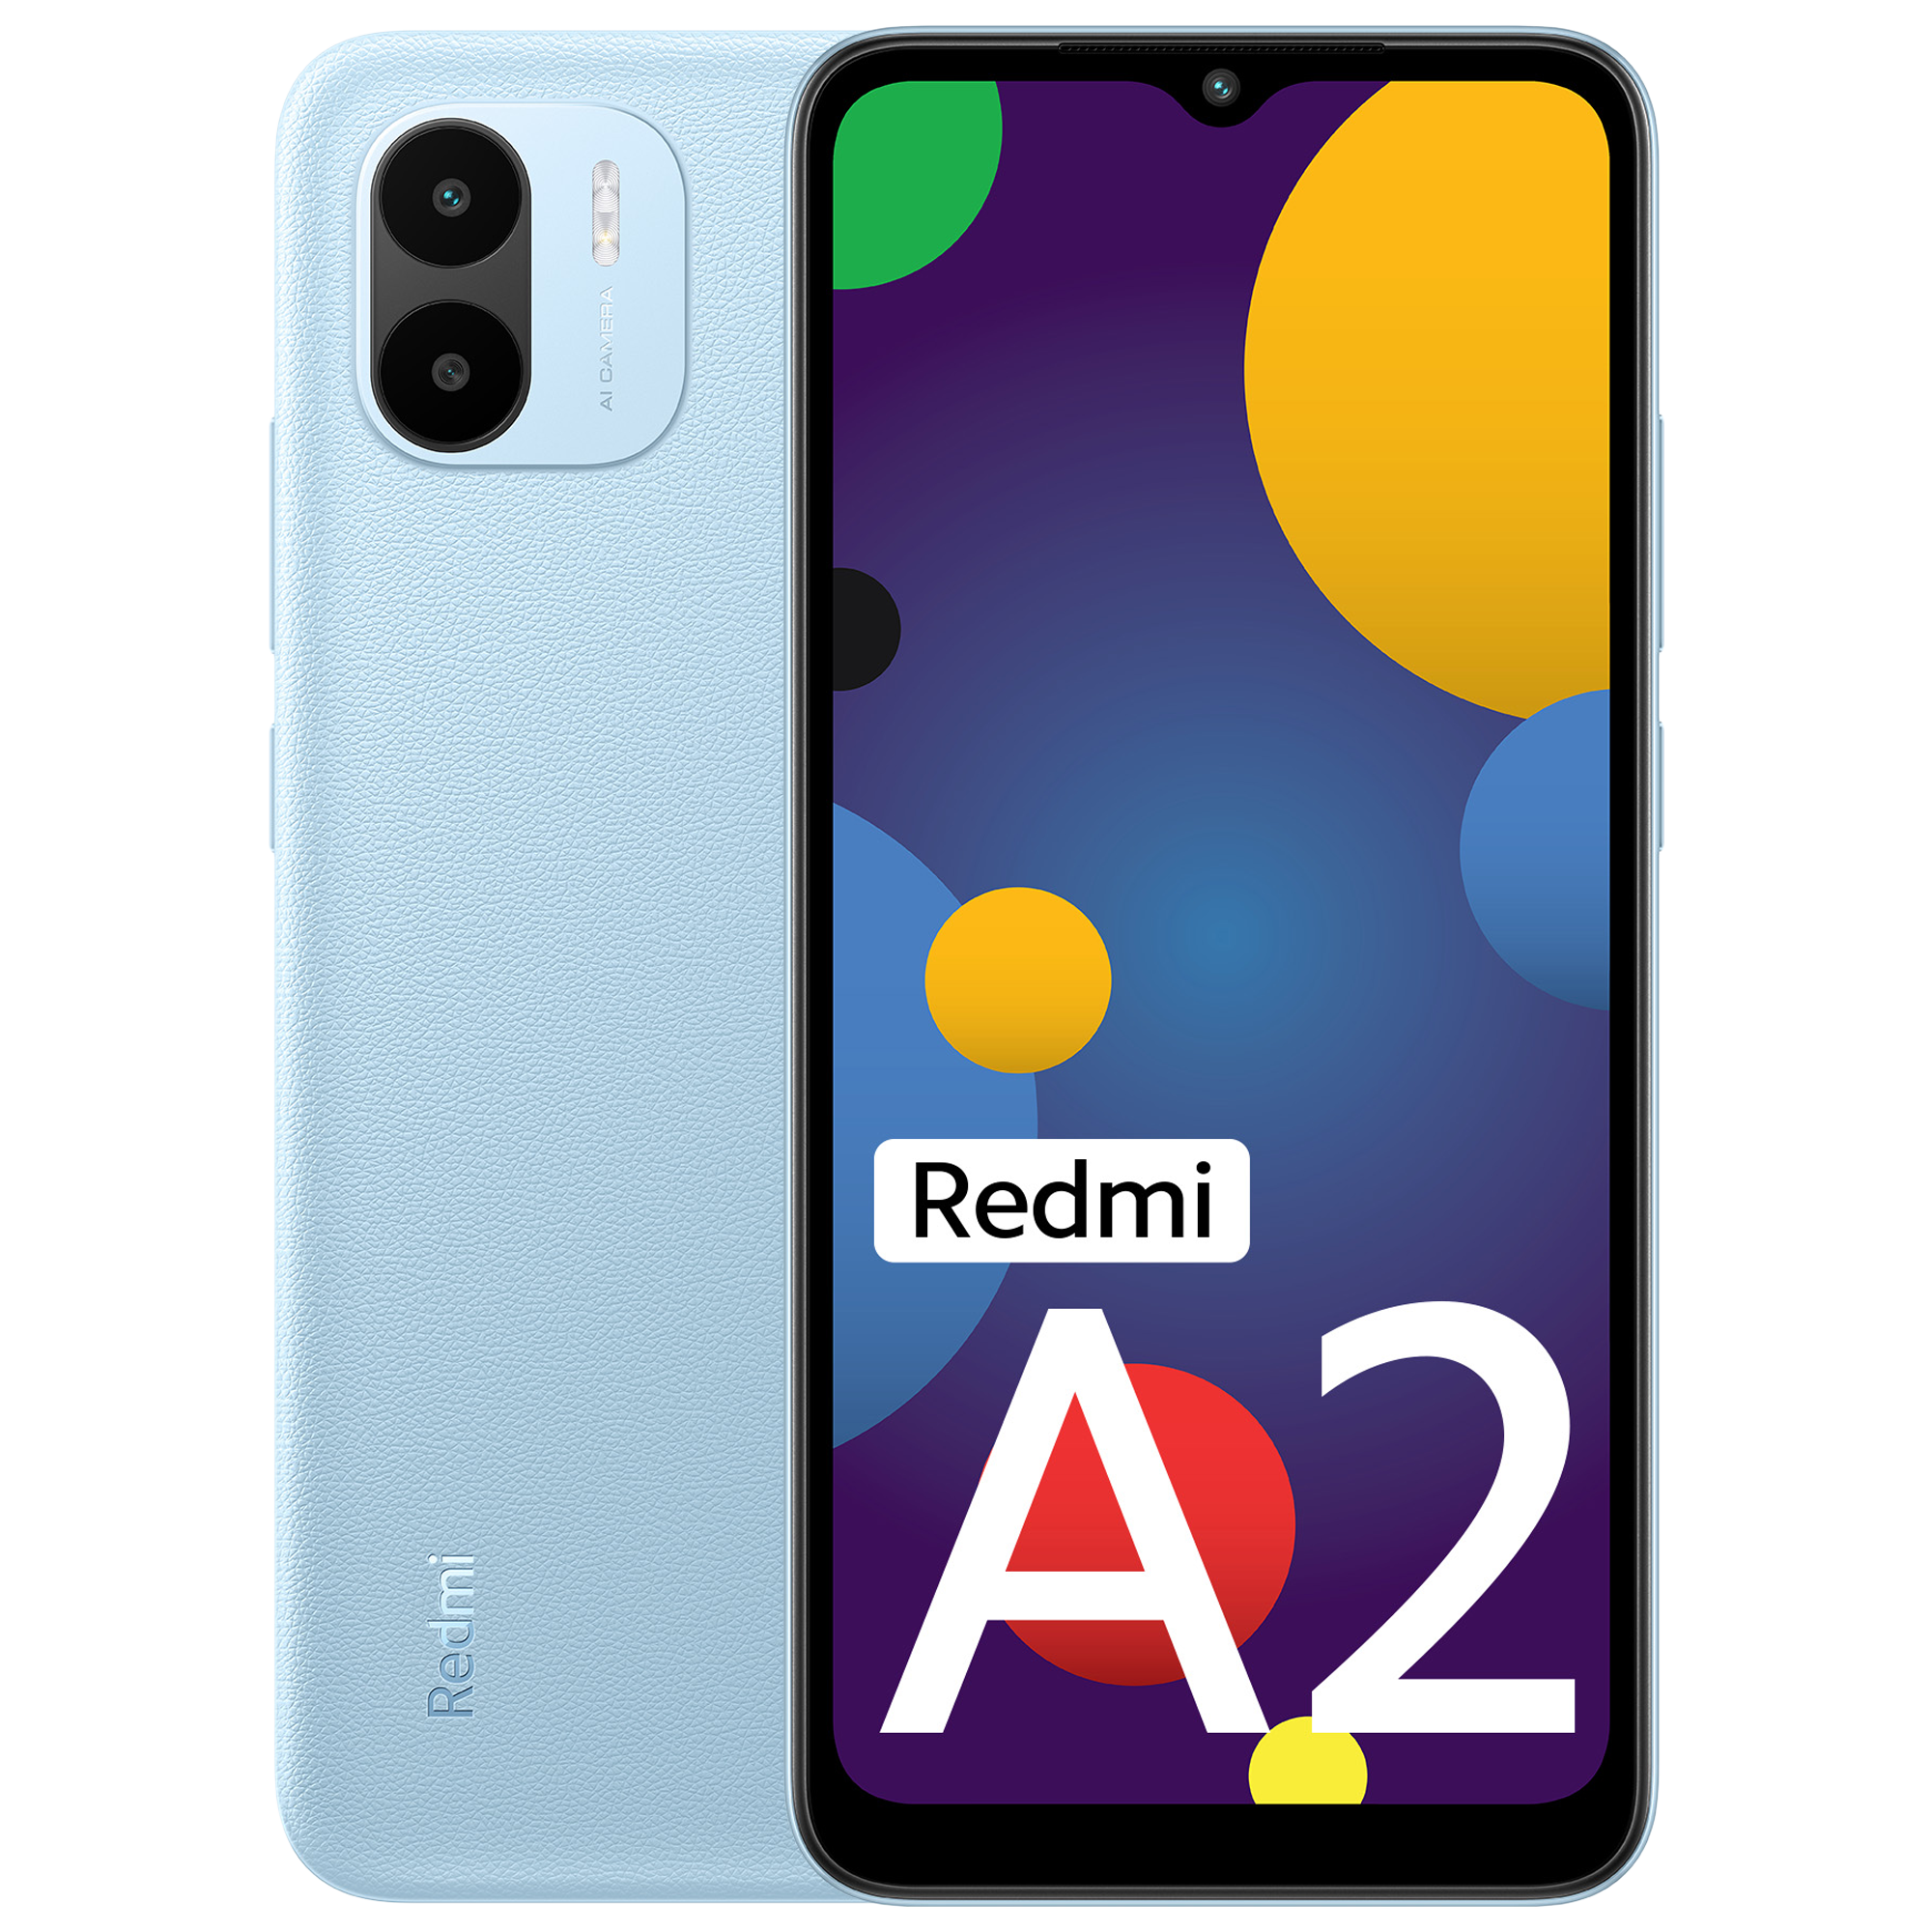 Xiaomi Redmi A2 Dual-SIM 32GB ROM + 2GB RAM (Only GSM | No CDMA) Factory  Unlocked 4G/LTE Smartphone (Light Blue) - International Version